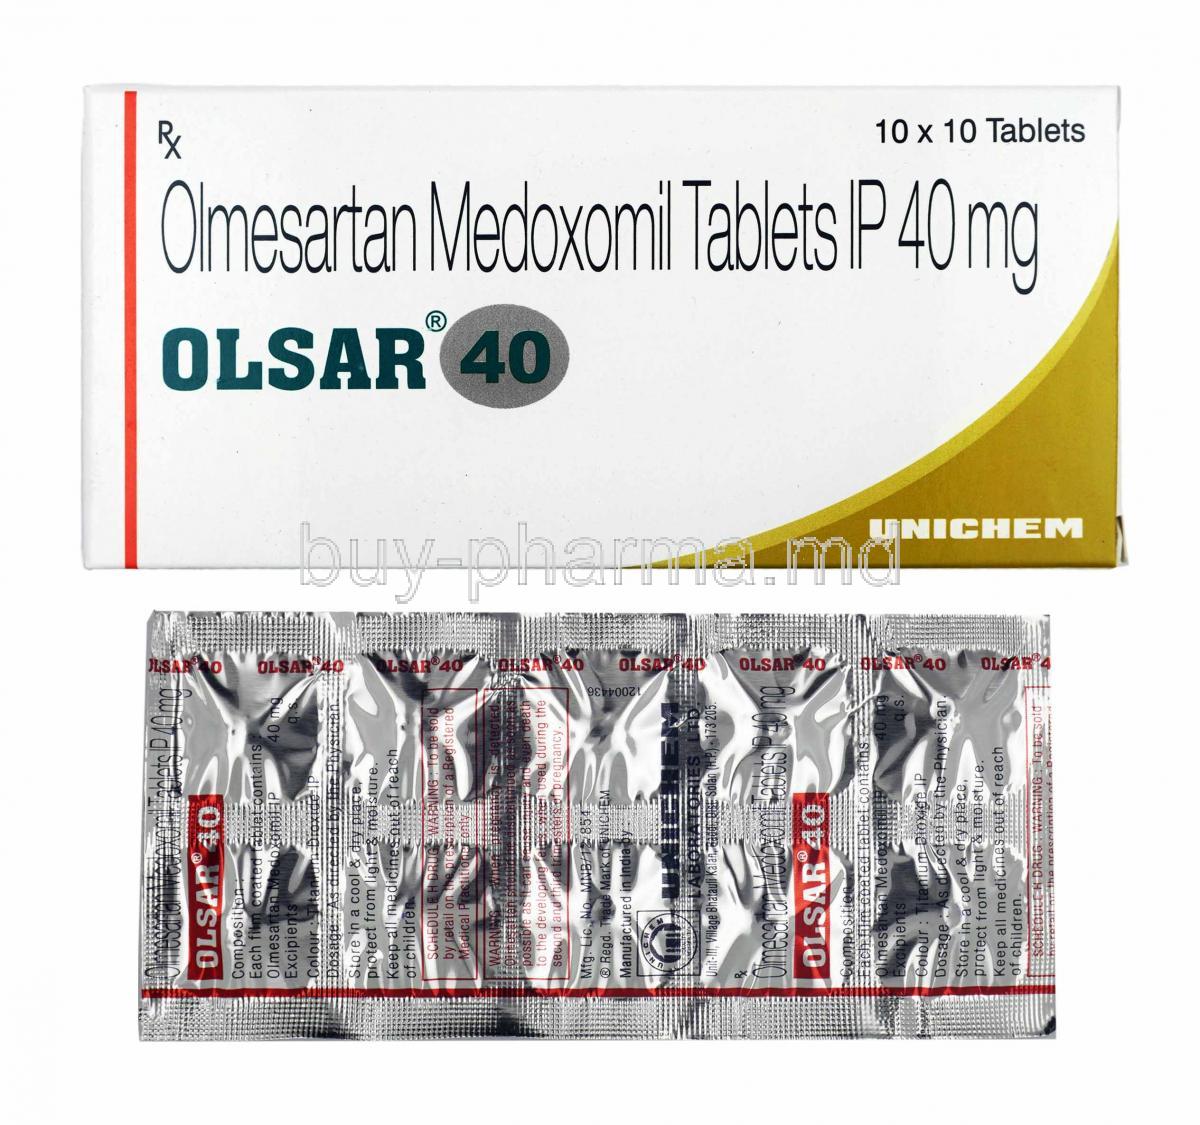 Olsar, Olmesartan 40mg box and tablets